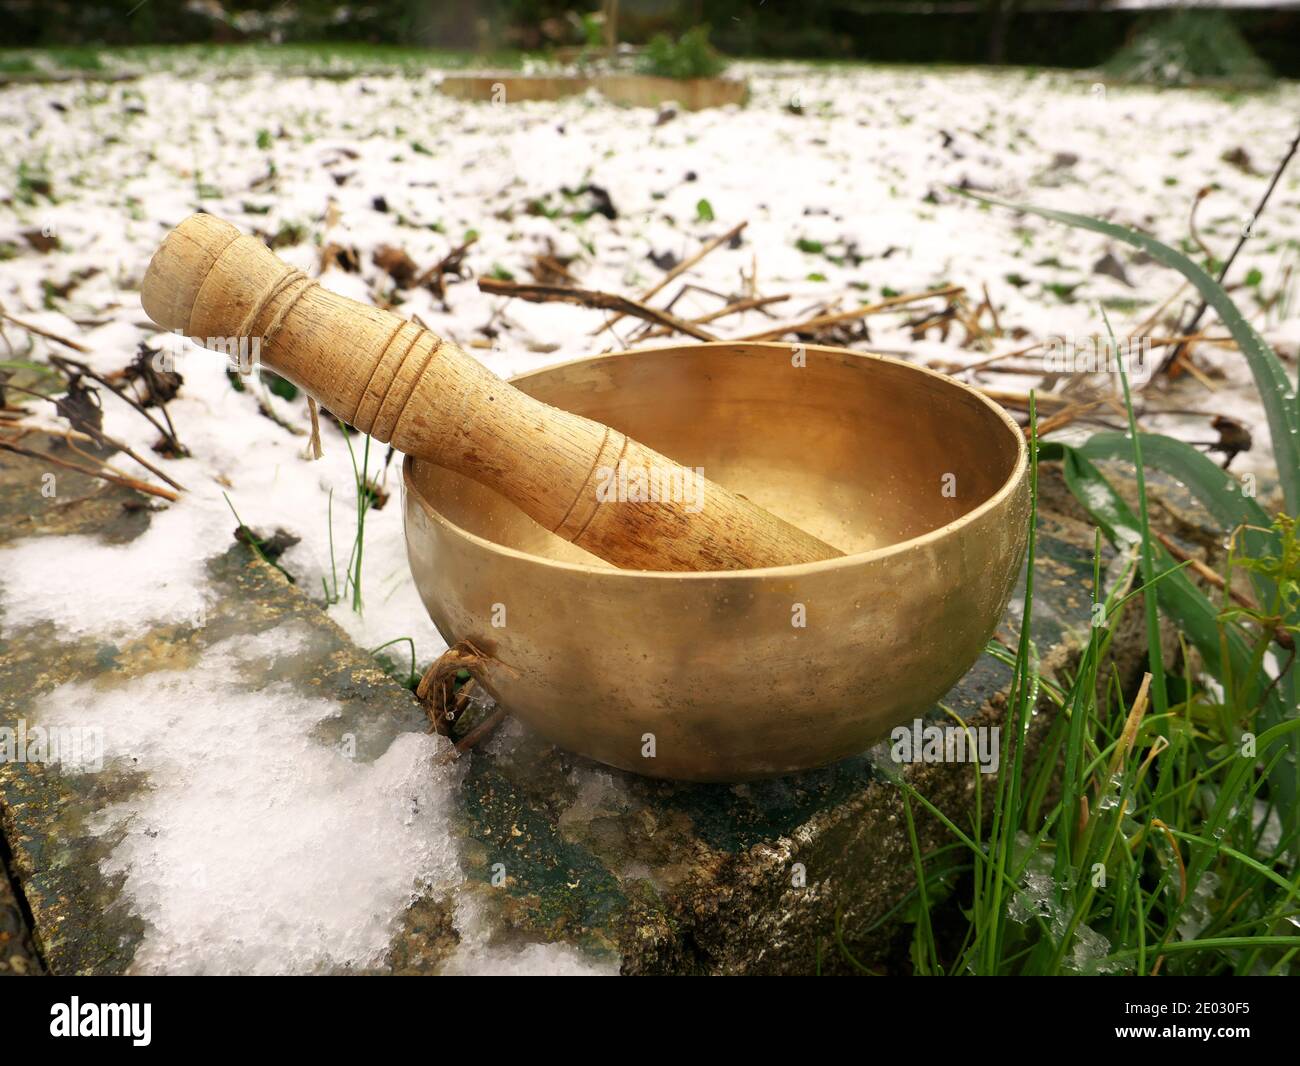 Singing bowl set in a snowy garden Stock Photo